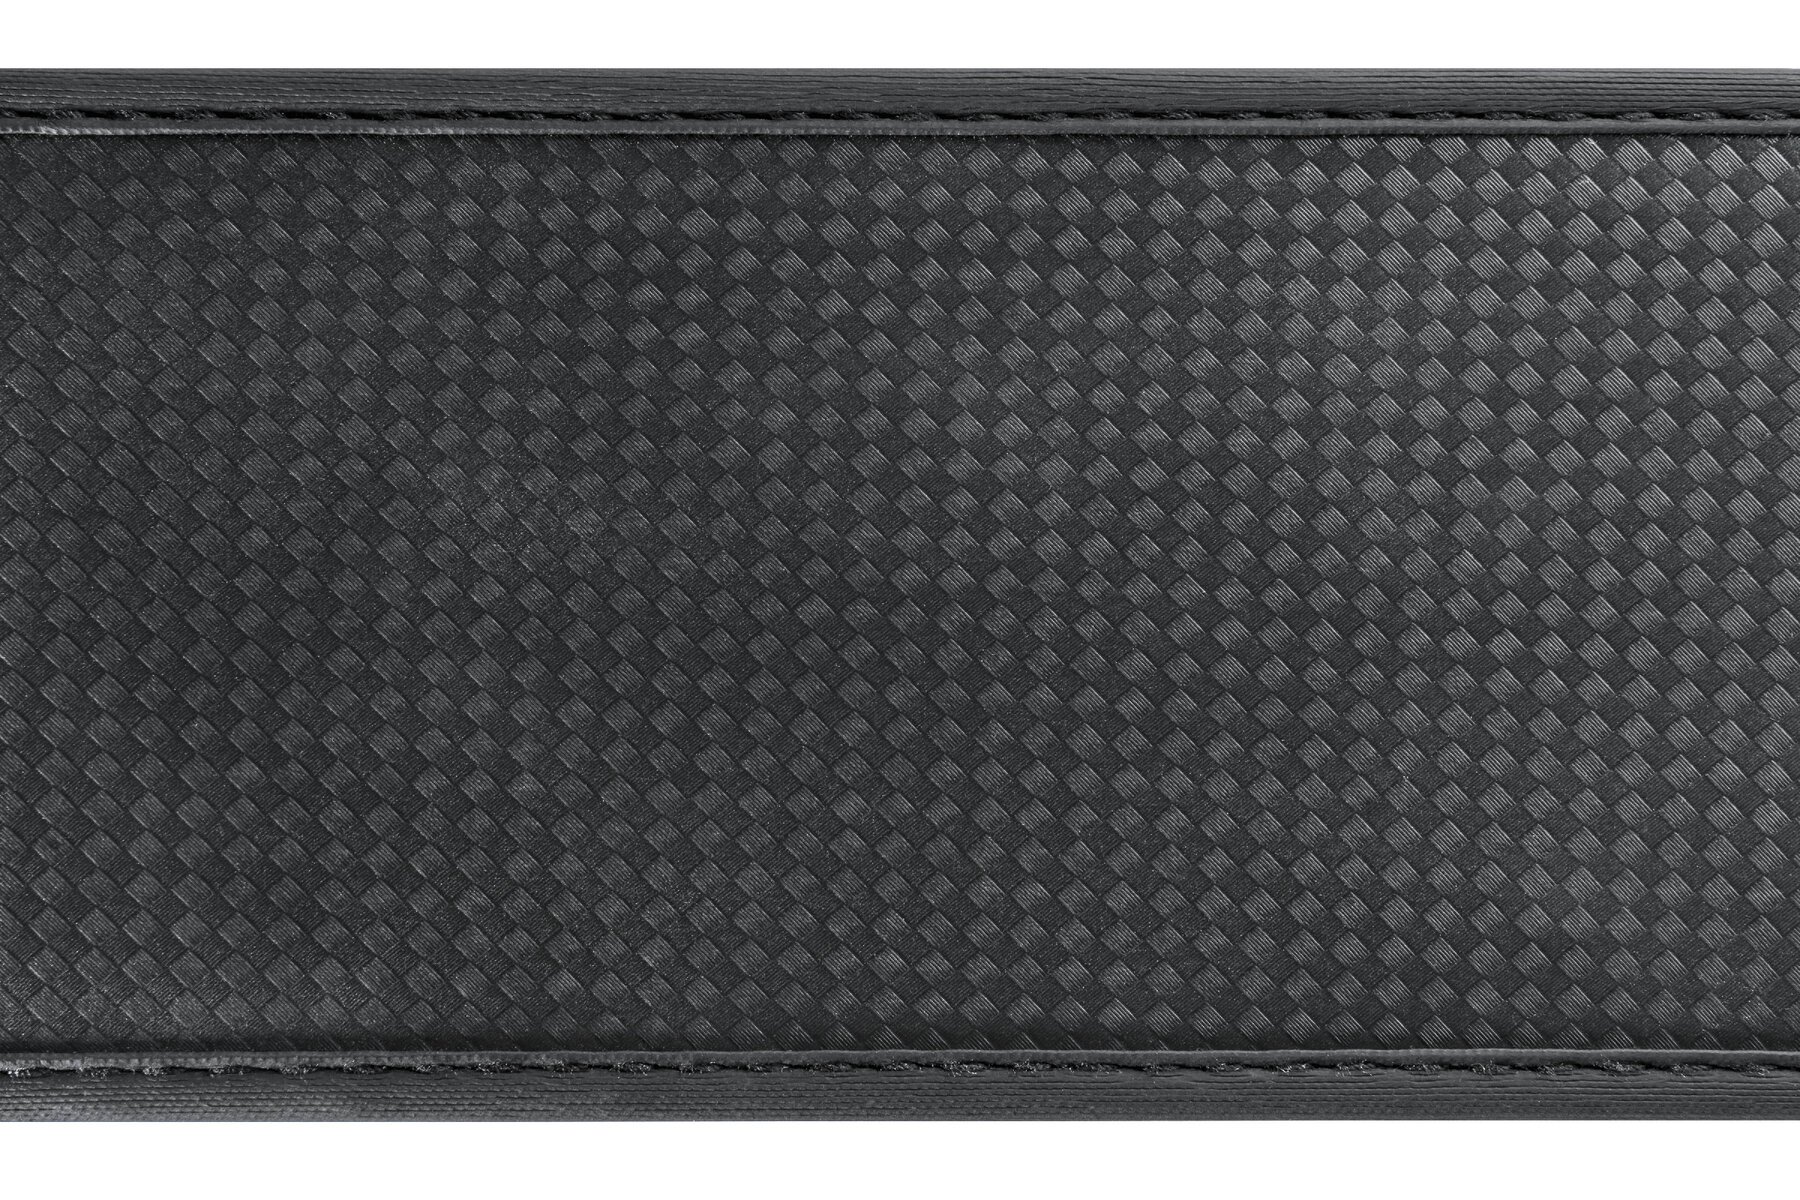 Stuurwielhoes Soft Grip Carbon - 38 cm zwart, auto stuurwielhoes, stuurwielbeschermer, stuurwielaccessoires met anti-slip laag, universele maat